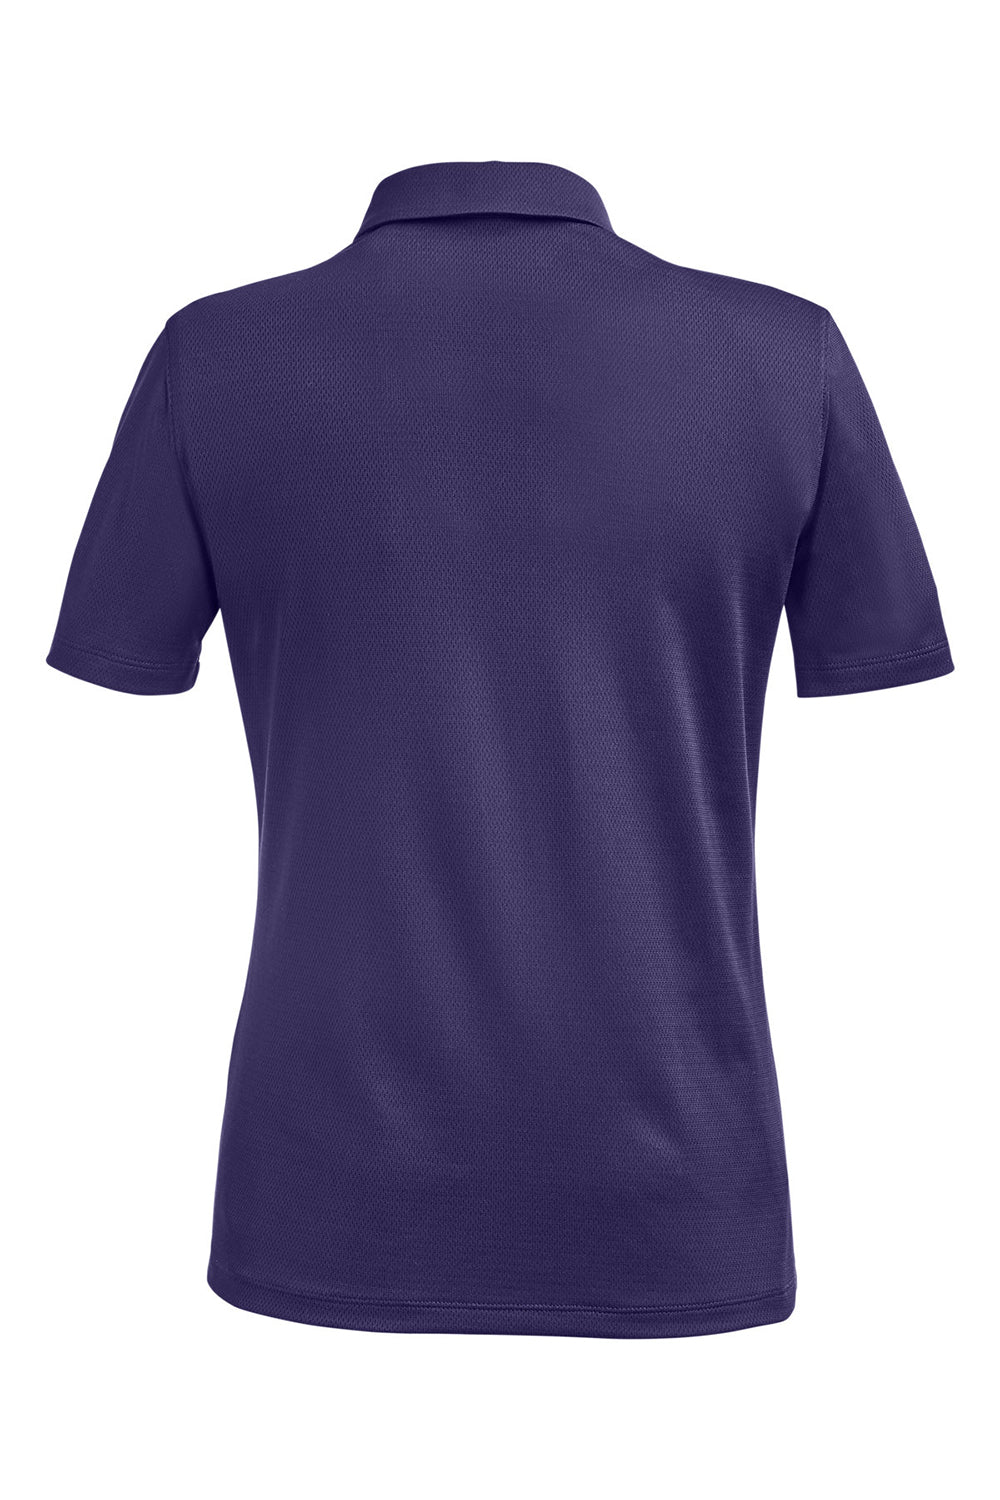 Under Armour 1370431 Womens Tech Moisture Wicking Short Sleeve Polo Shirt Purple Flat Back